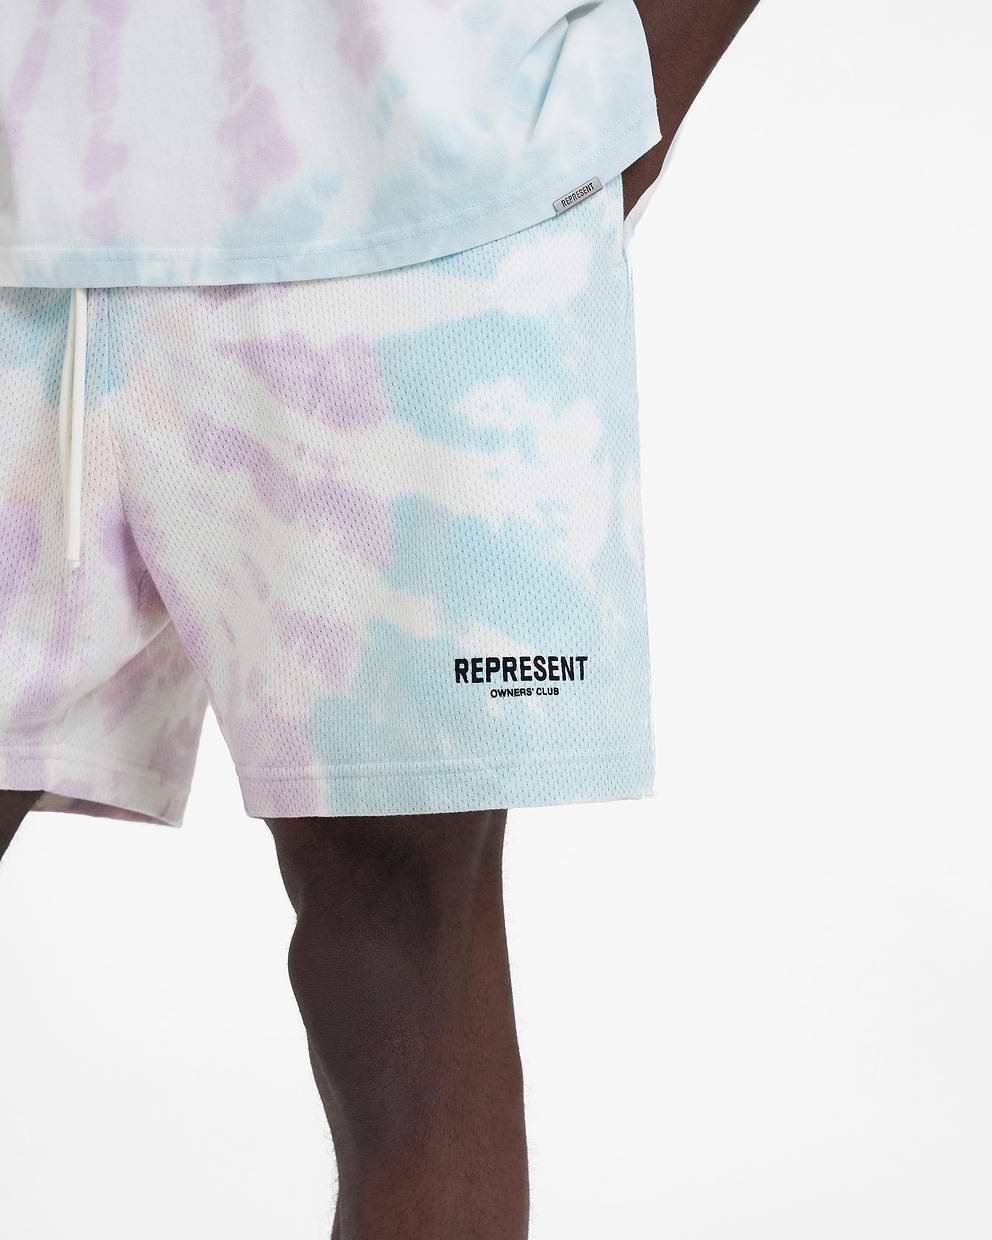 Represent Owners Club Mesh Shorts - Tie Dye